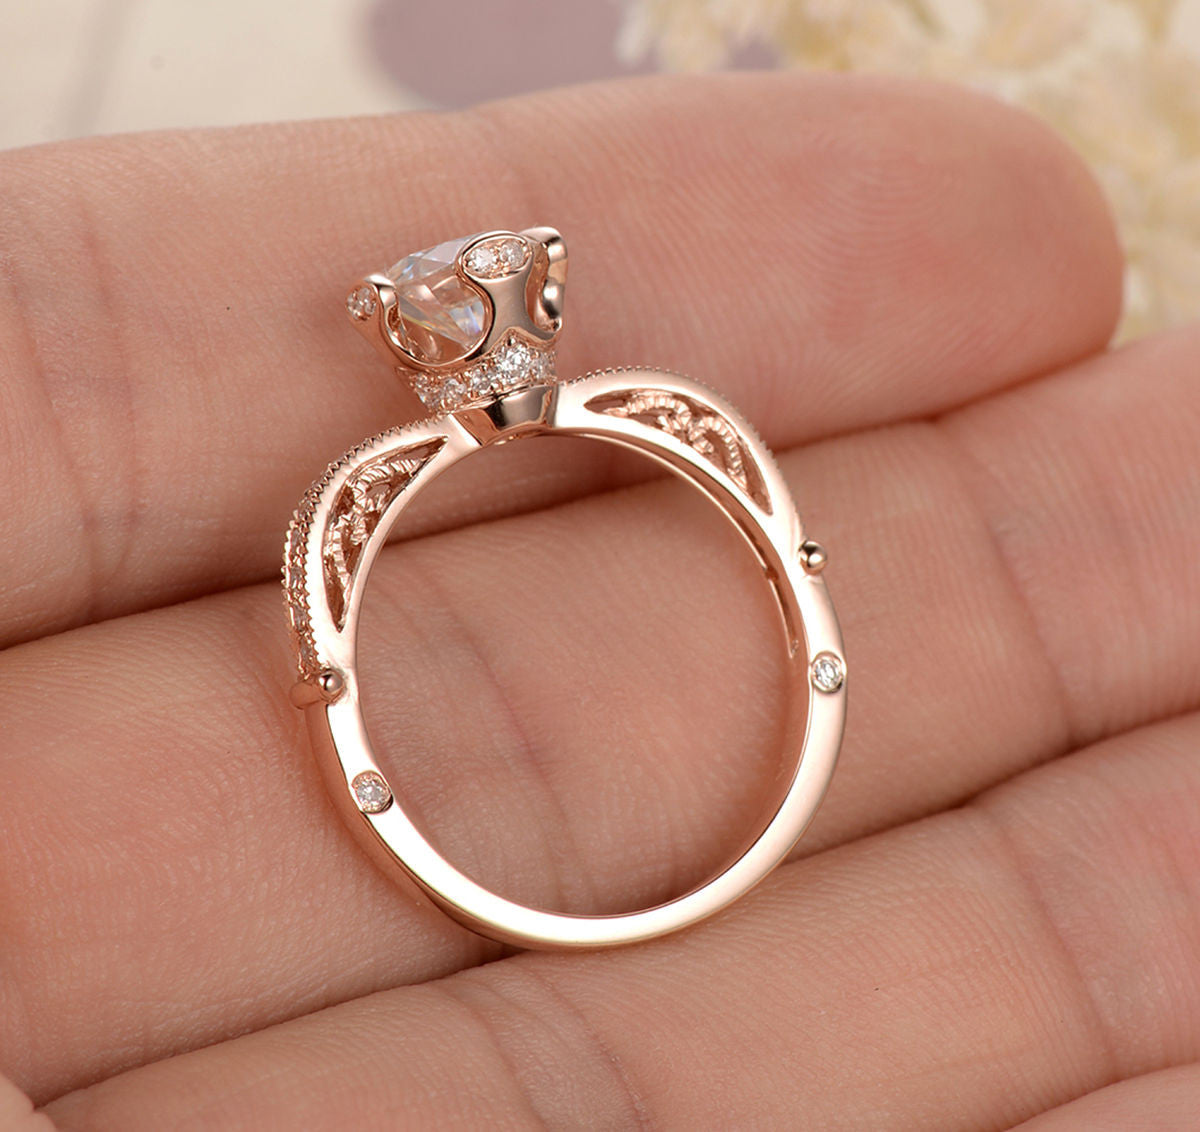 Round FB Moissanite Engagement Ring Pave Diamond Wedding 14K Rose Gold 6.5mm - Lord of Gem Rings - 3